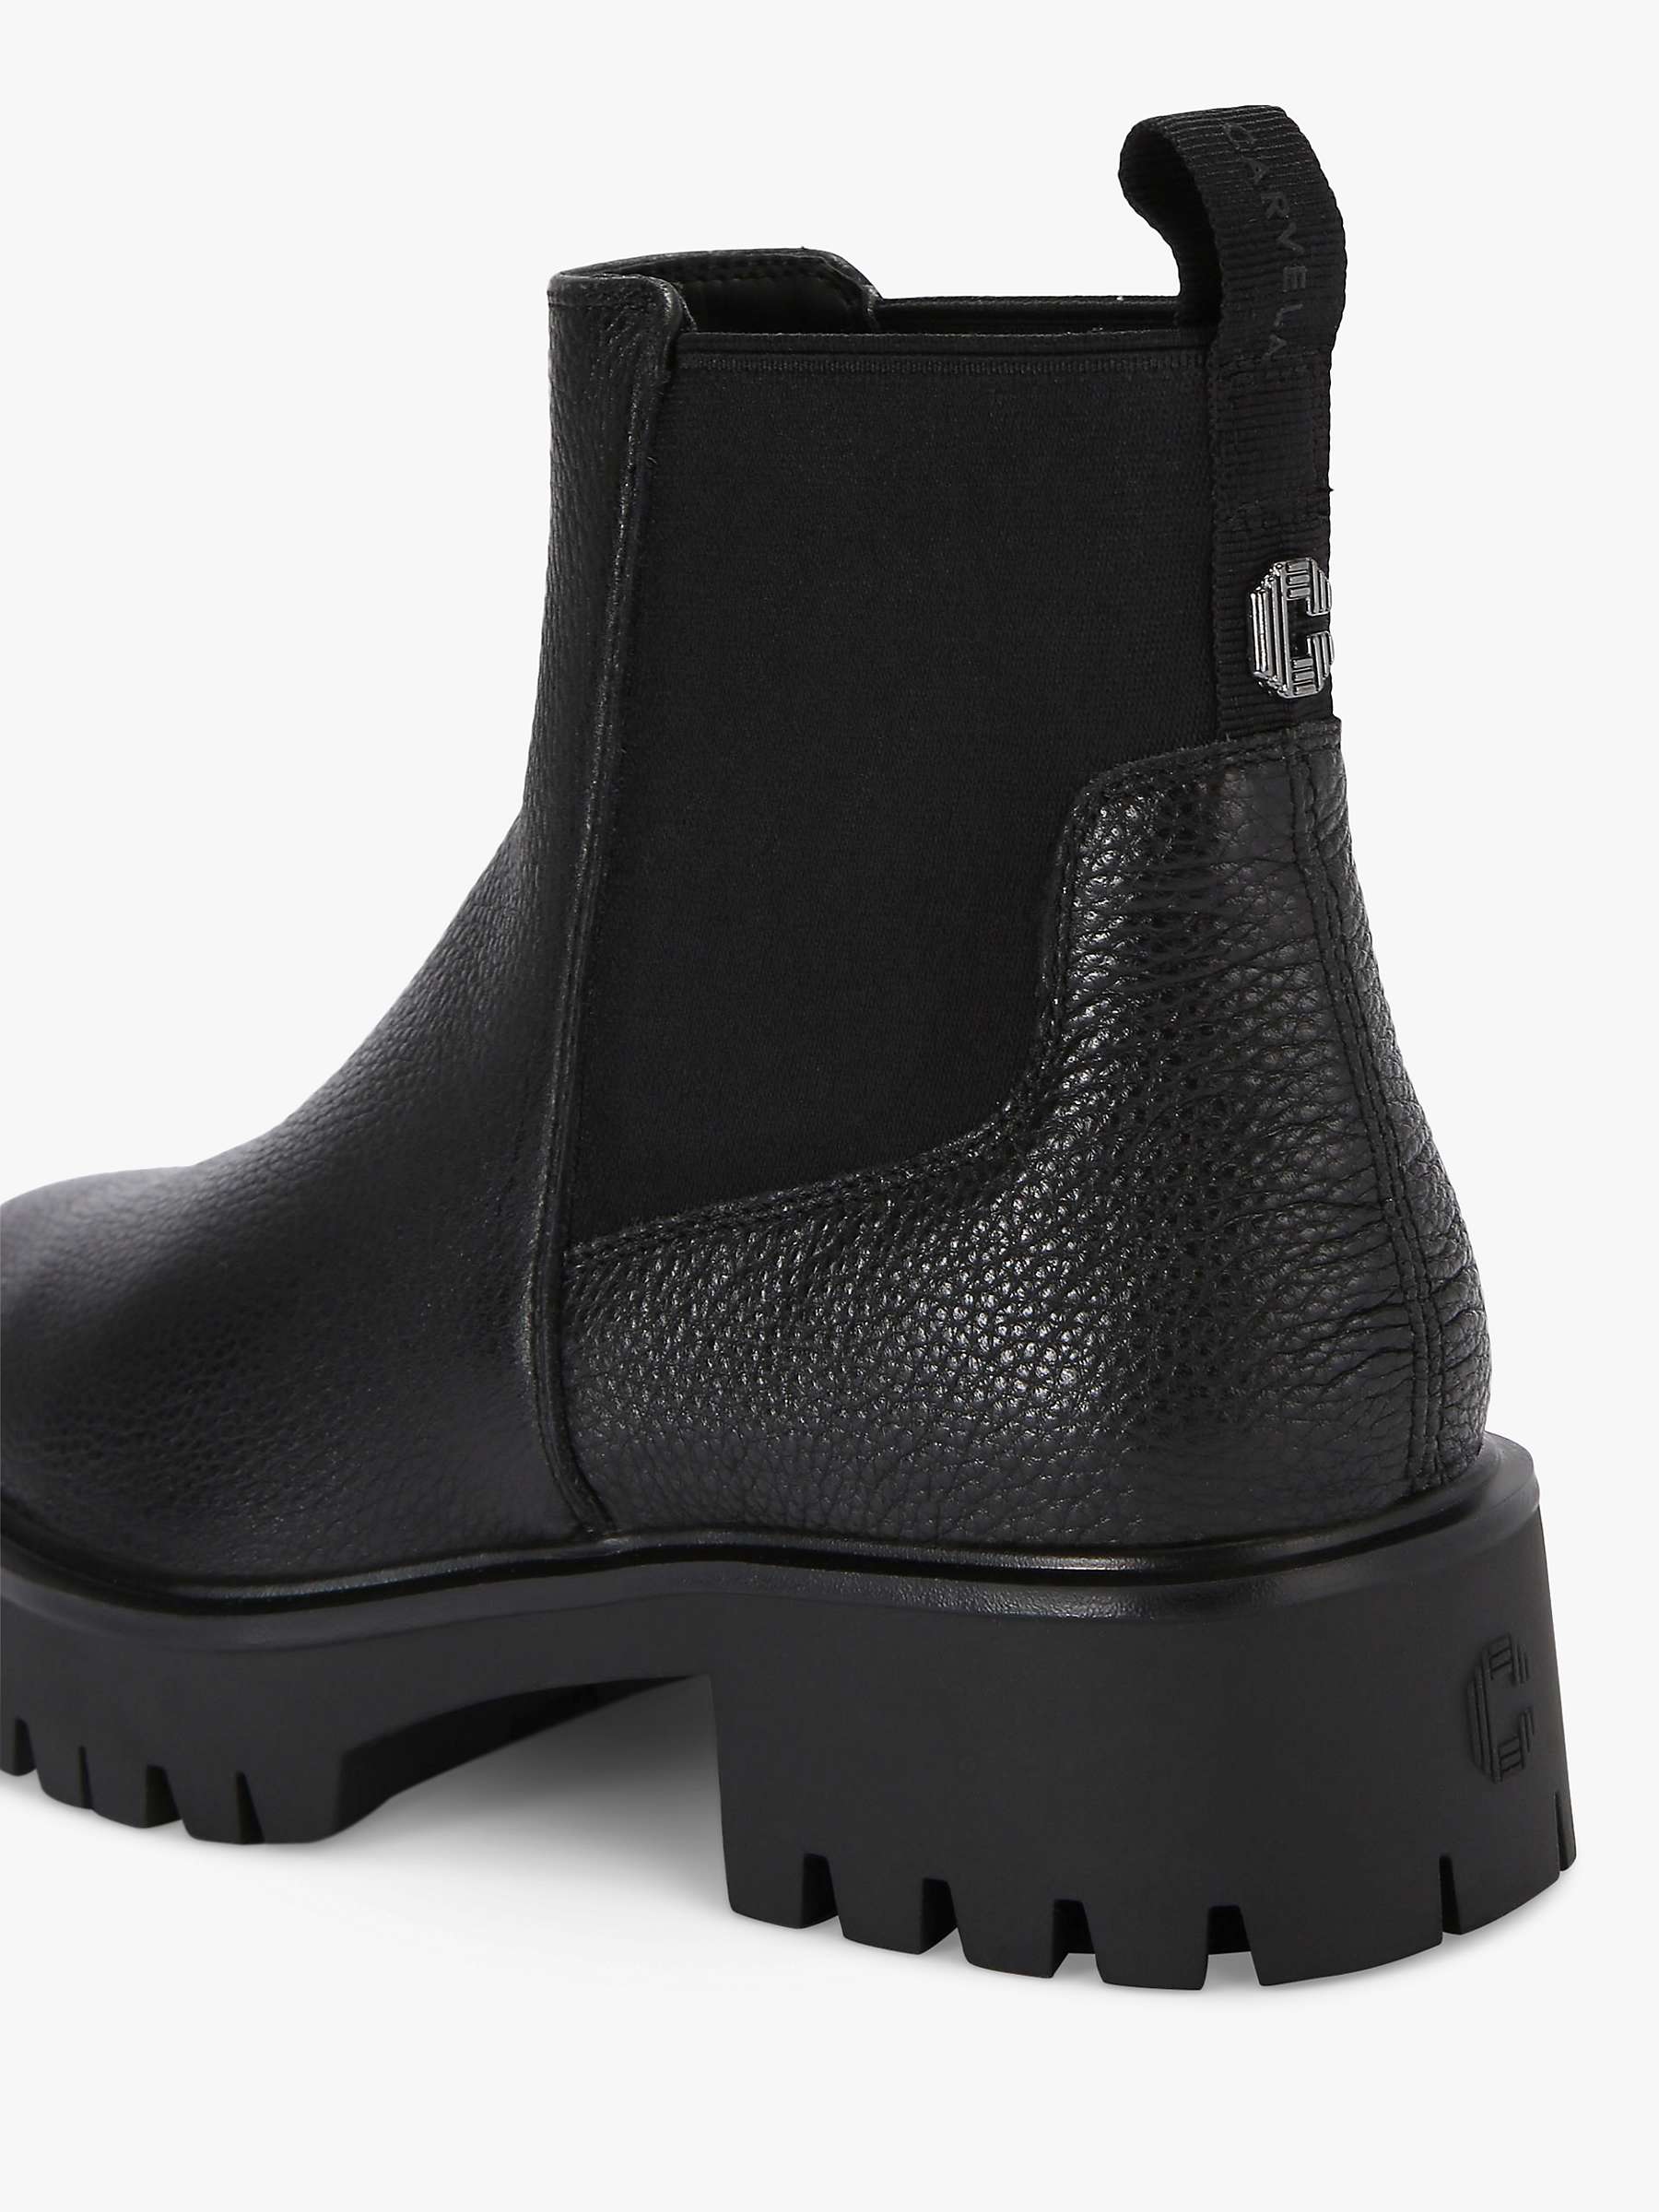 Buy Carvela Limit Leather Chelsea Boots, Black Online at johnlewis.com